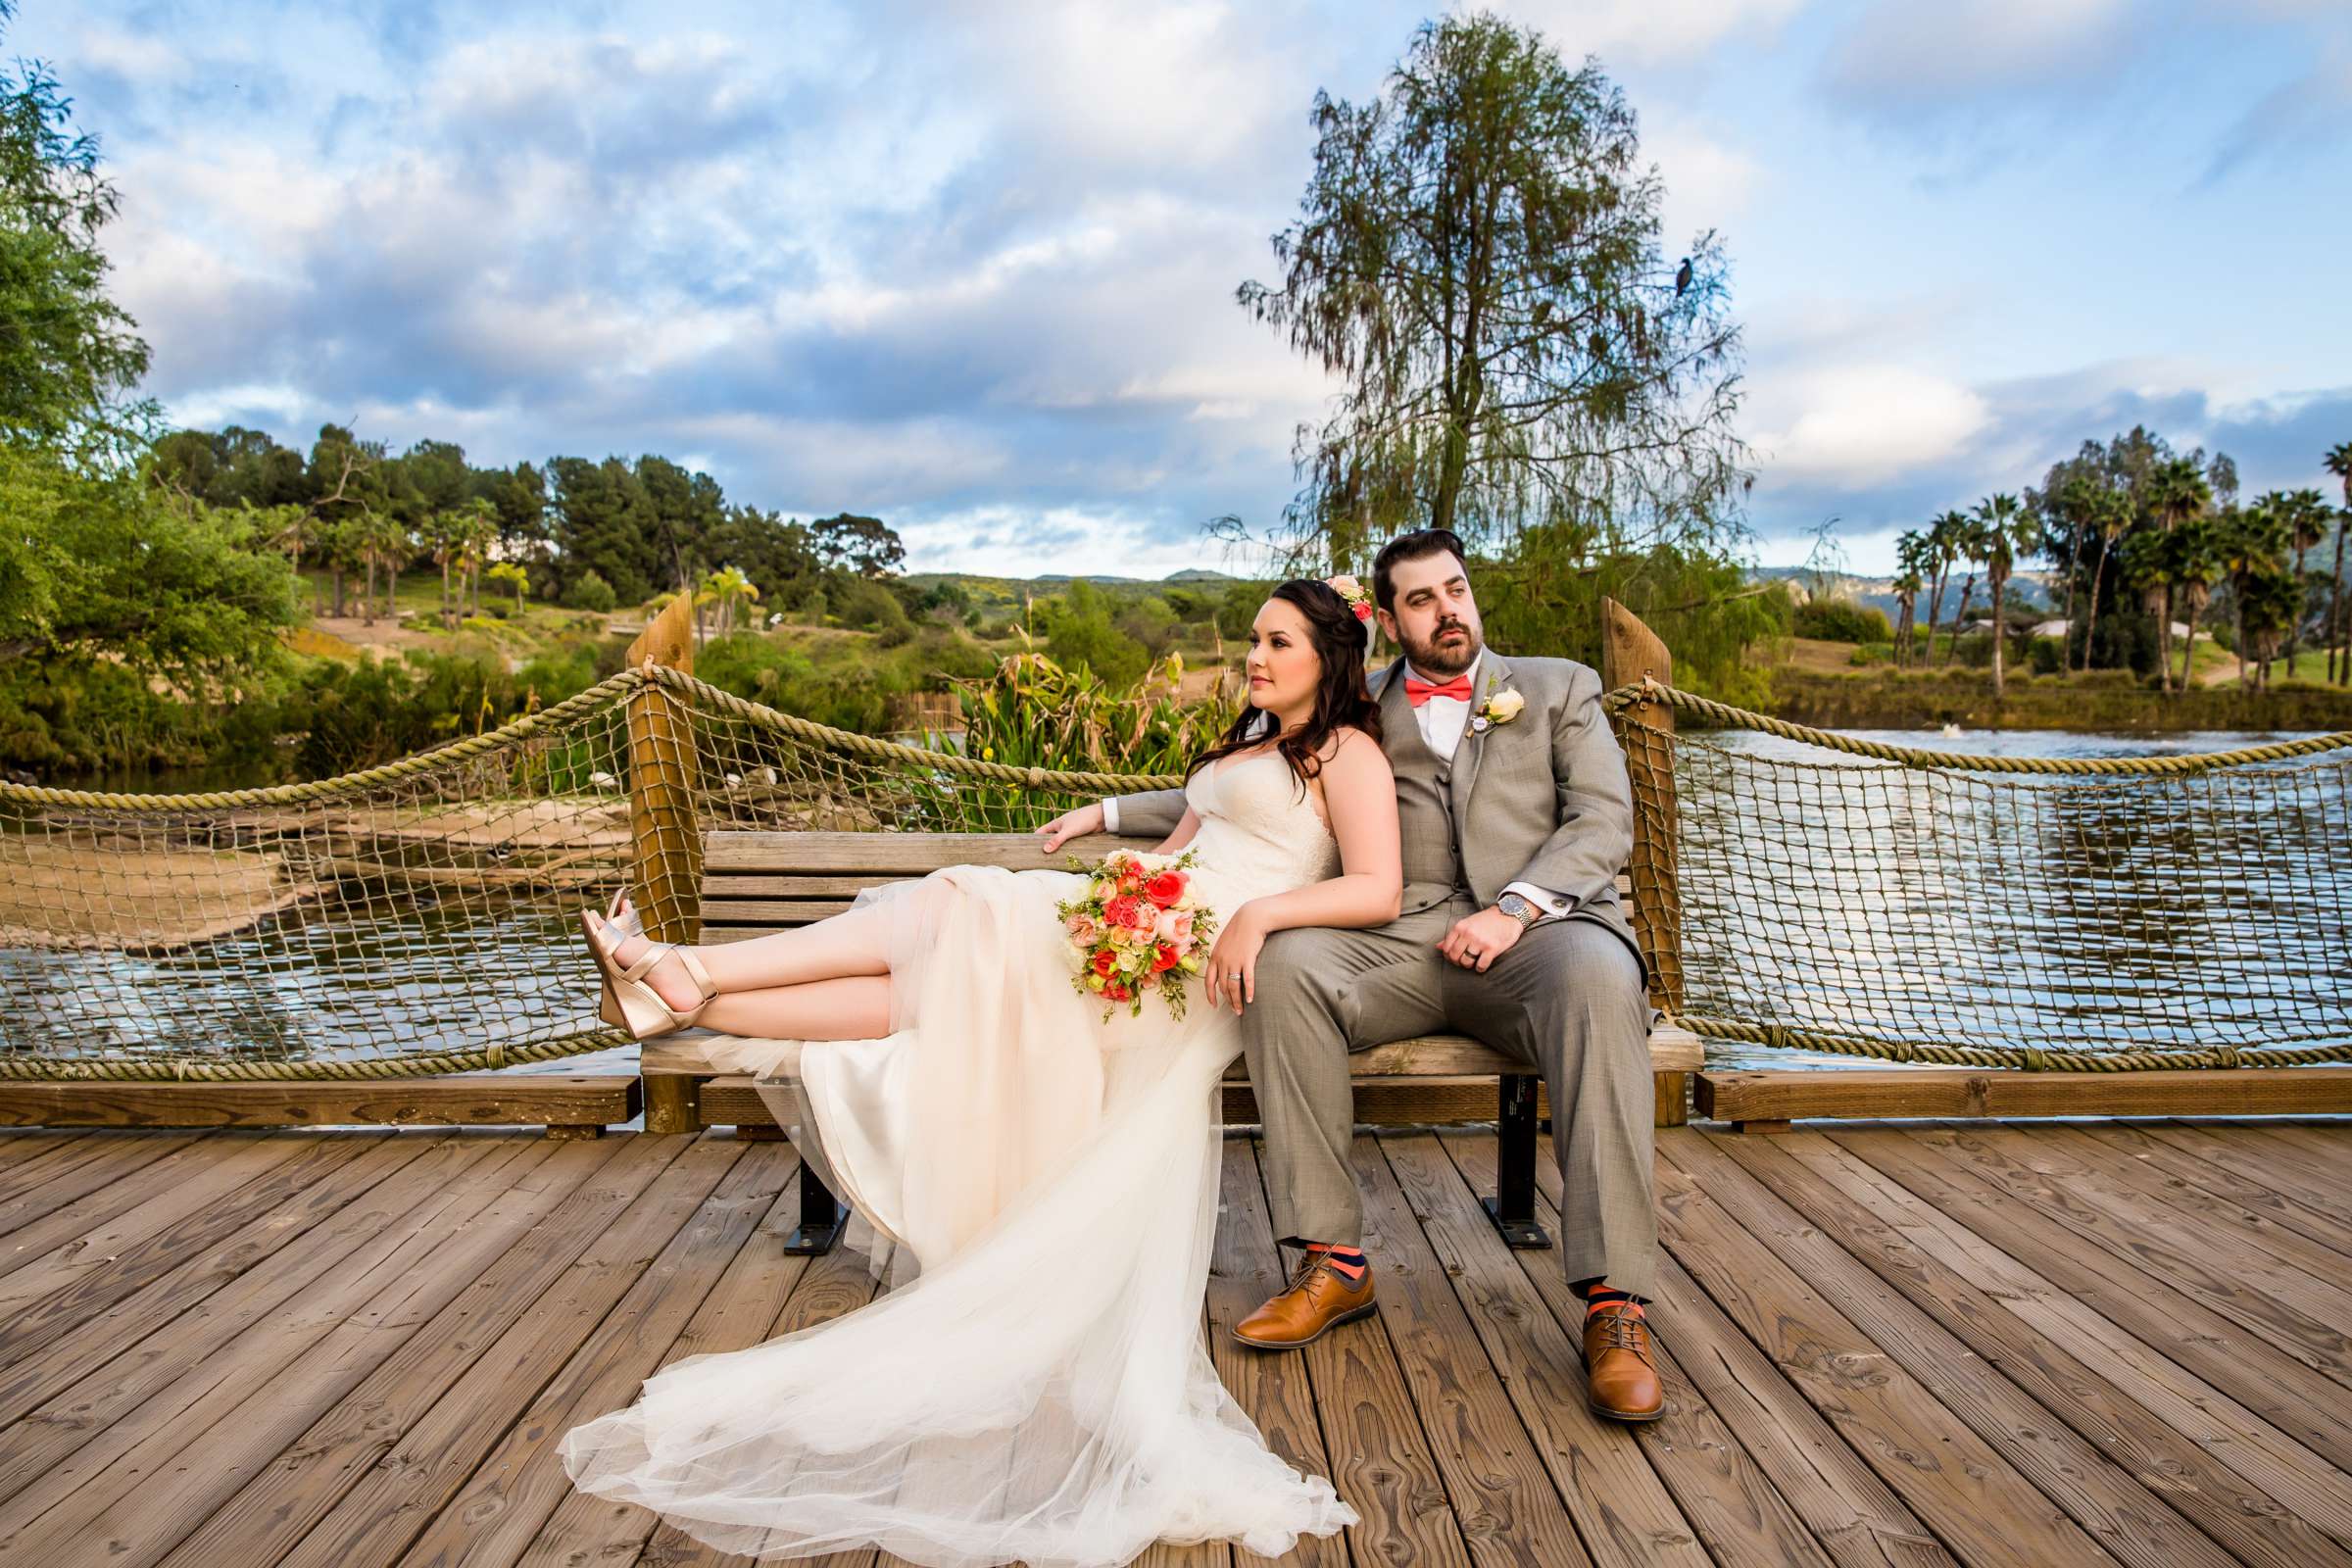 Safari Park Wedding, Jessica and Nick Wedding Photo #1 by True Photography